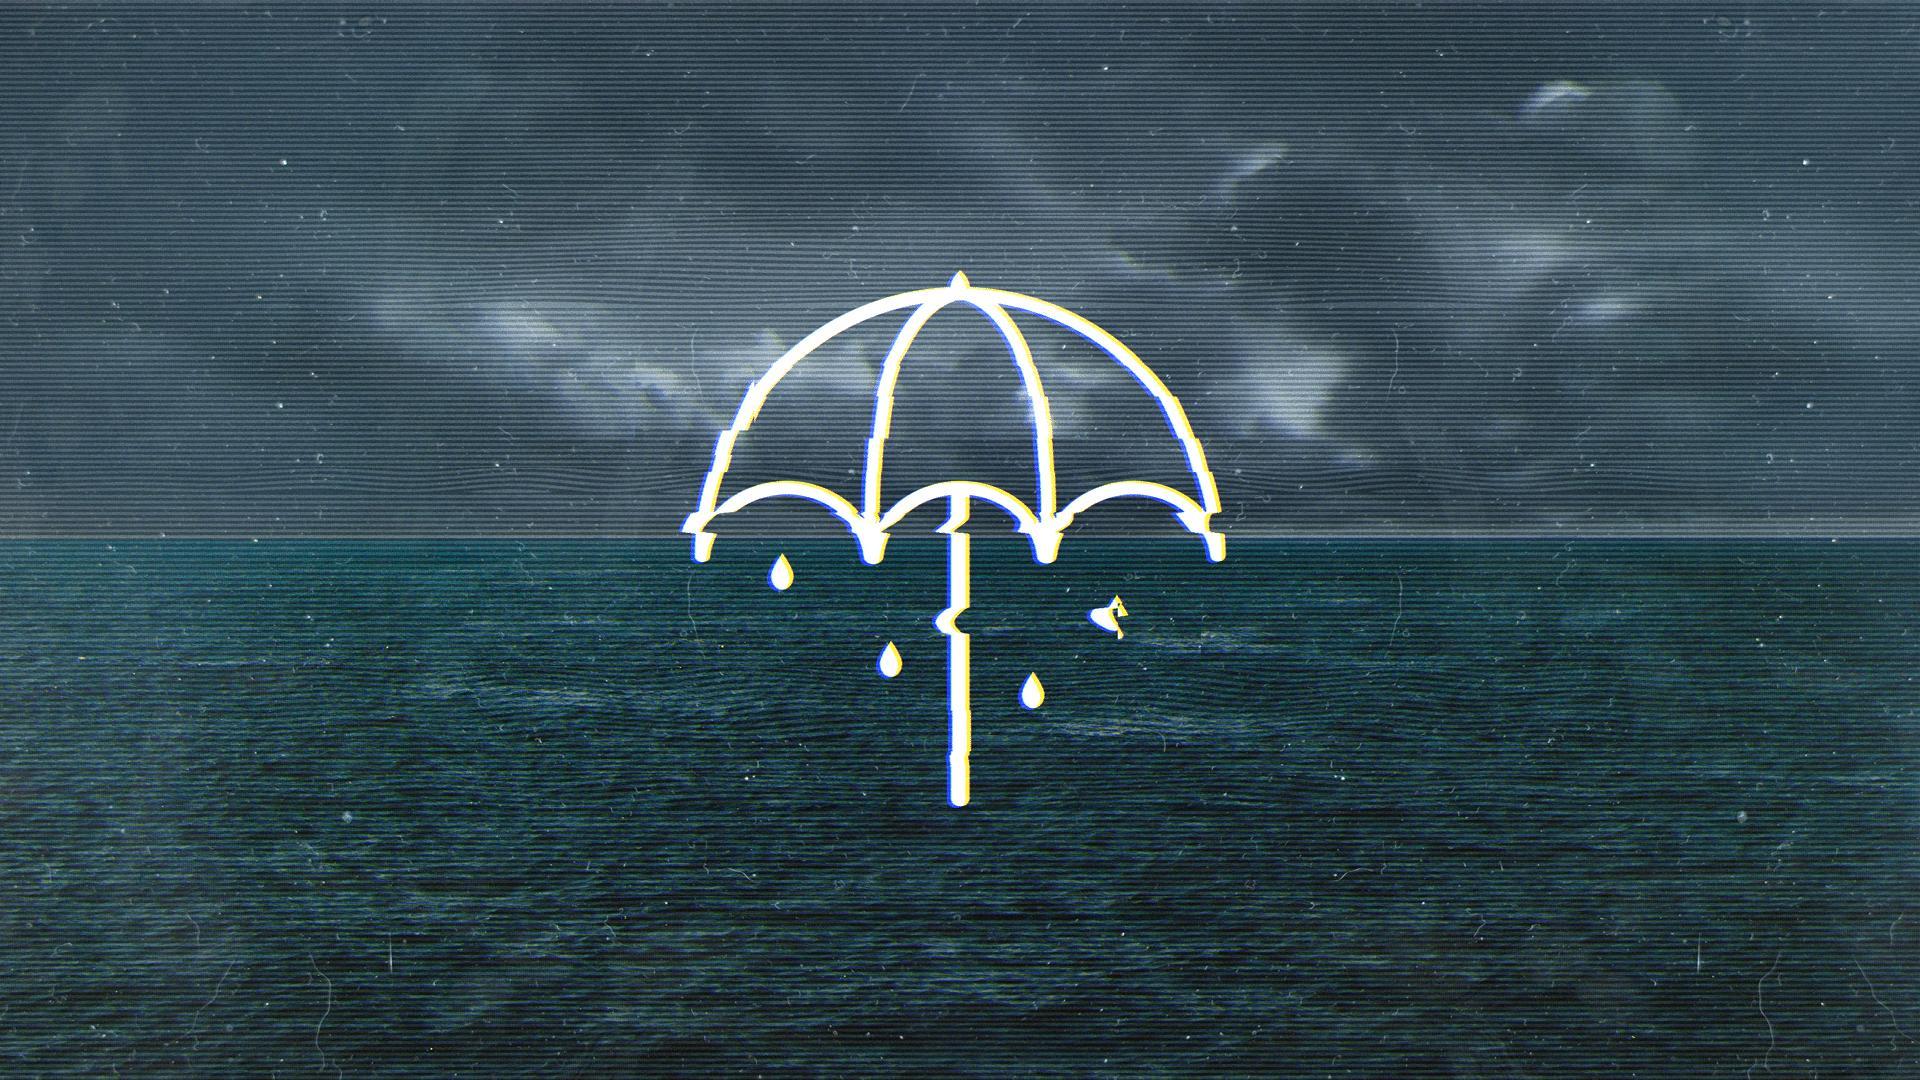 Bring Me the Horizon Umbrella Logo - Just made a quick wallpaper with the umbrella logo. I'll be taking